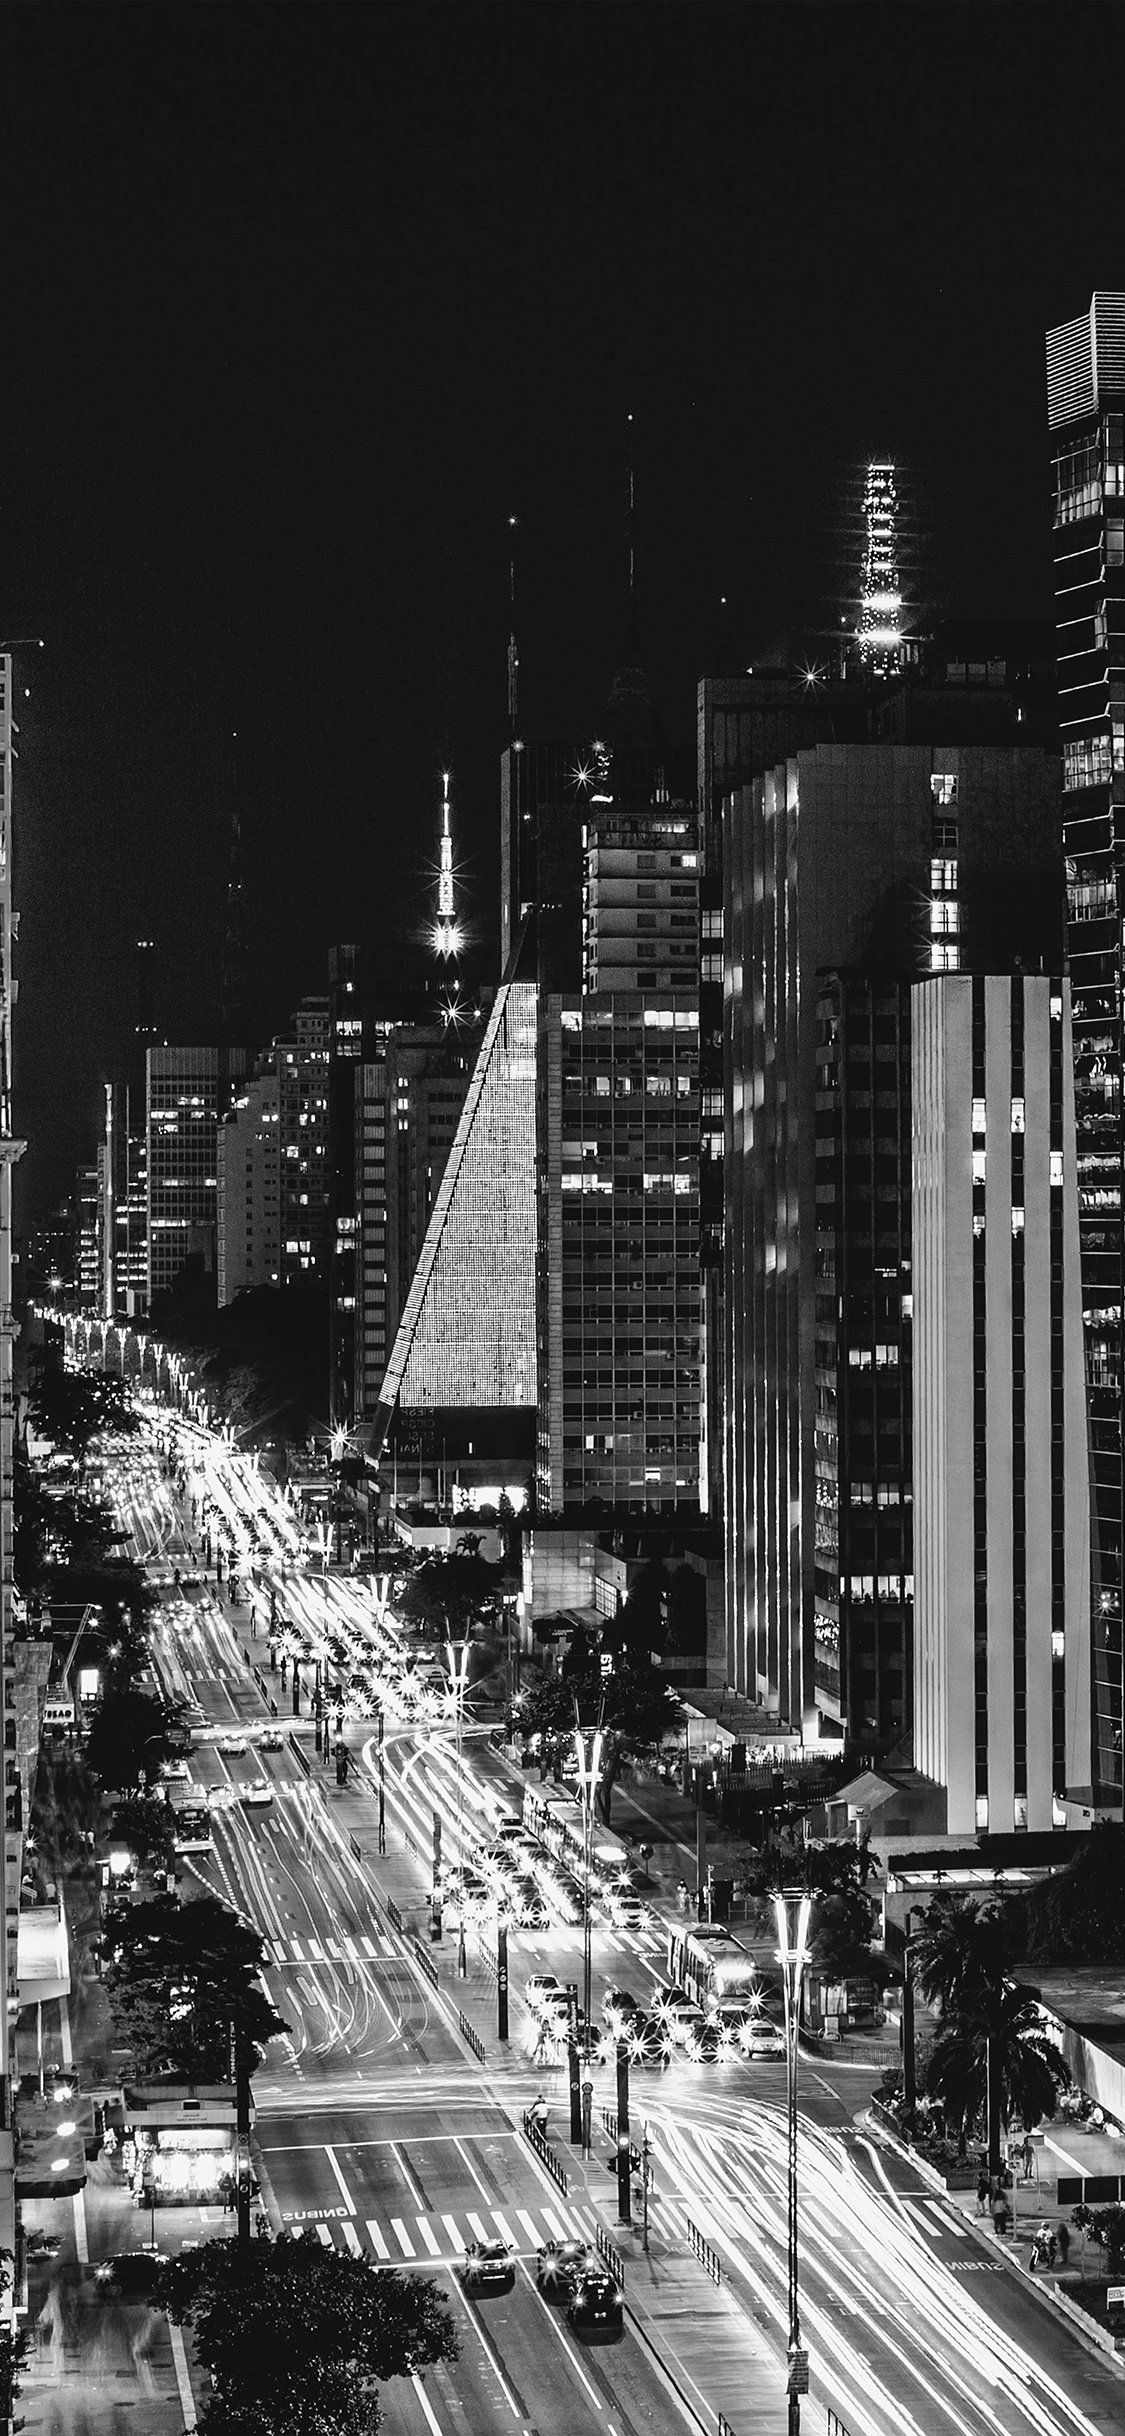 City night view urban street dark iPhone X Wallpaper Free Download